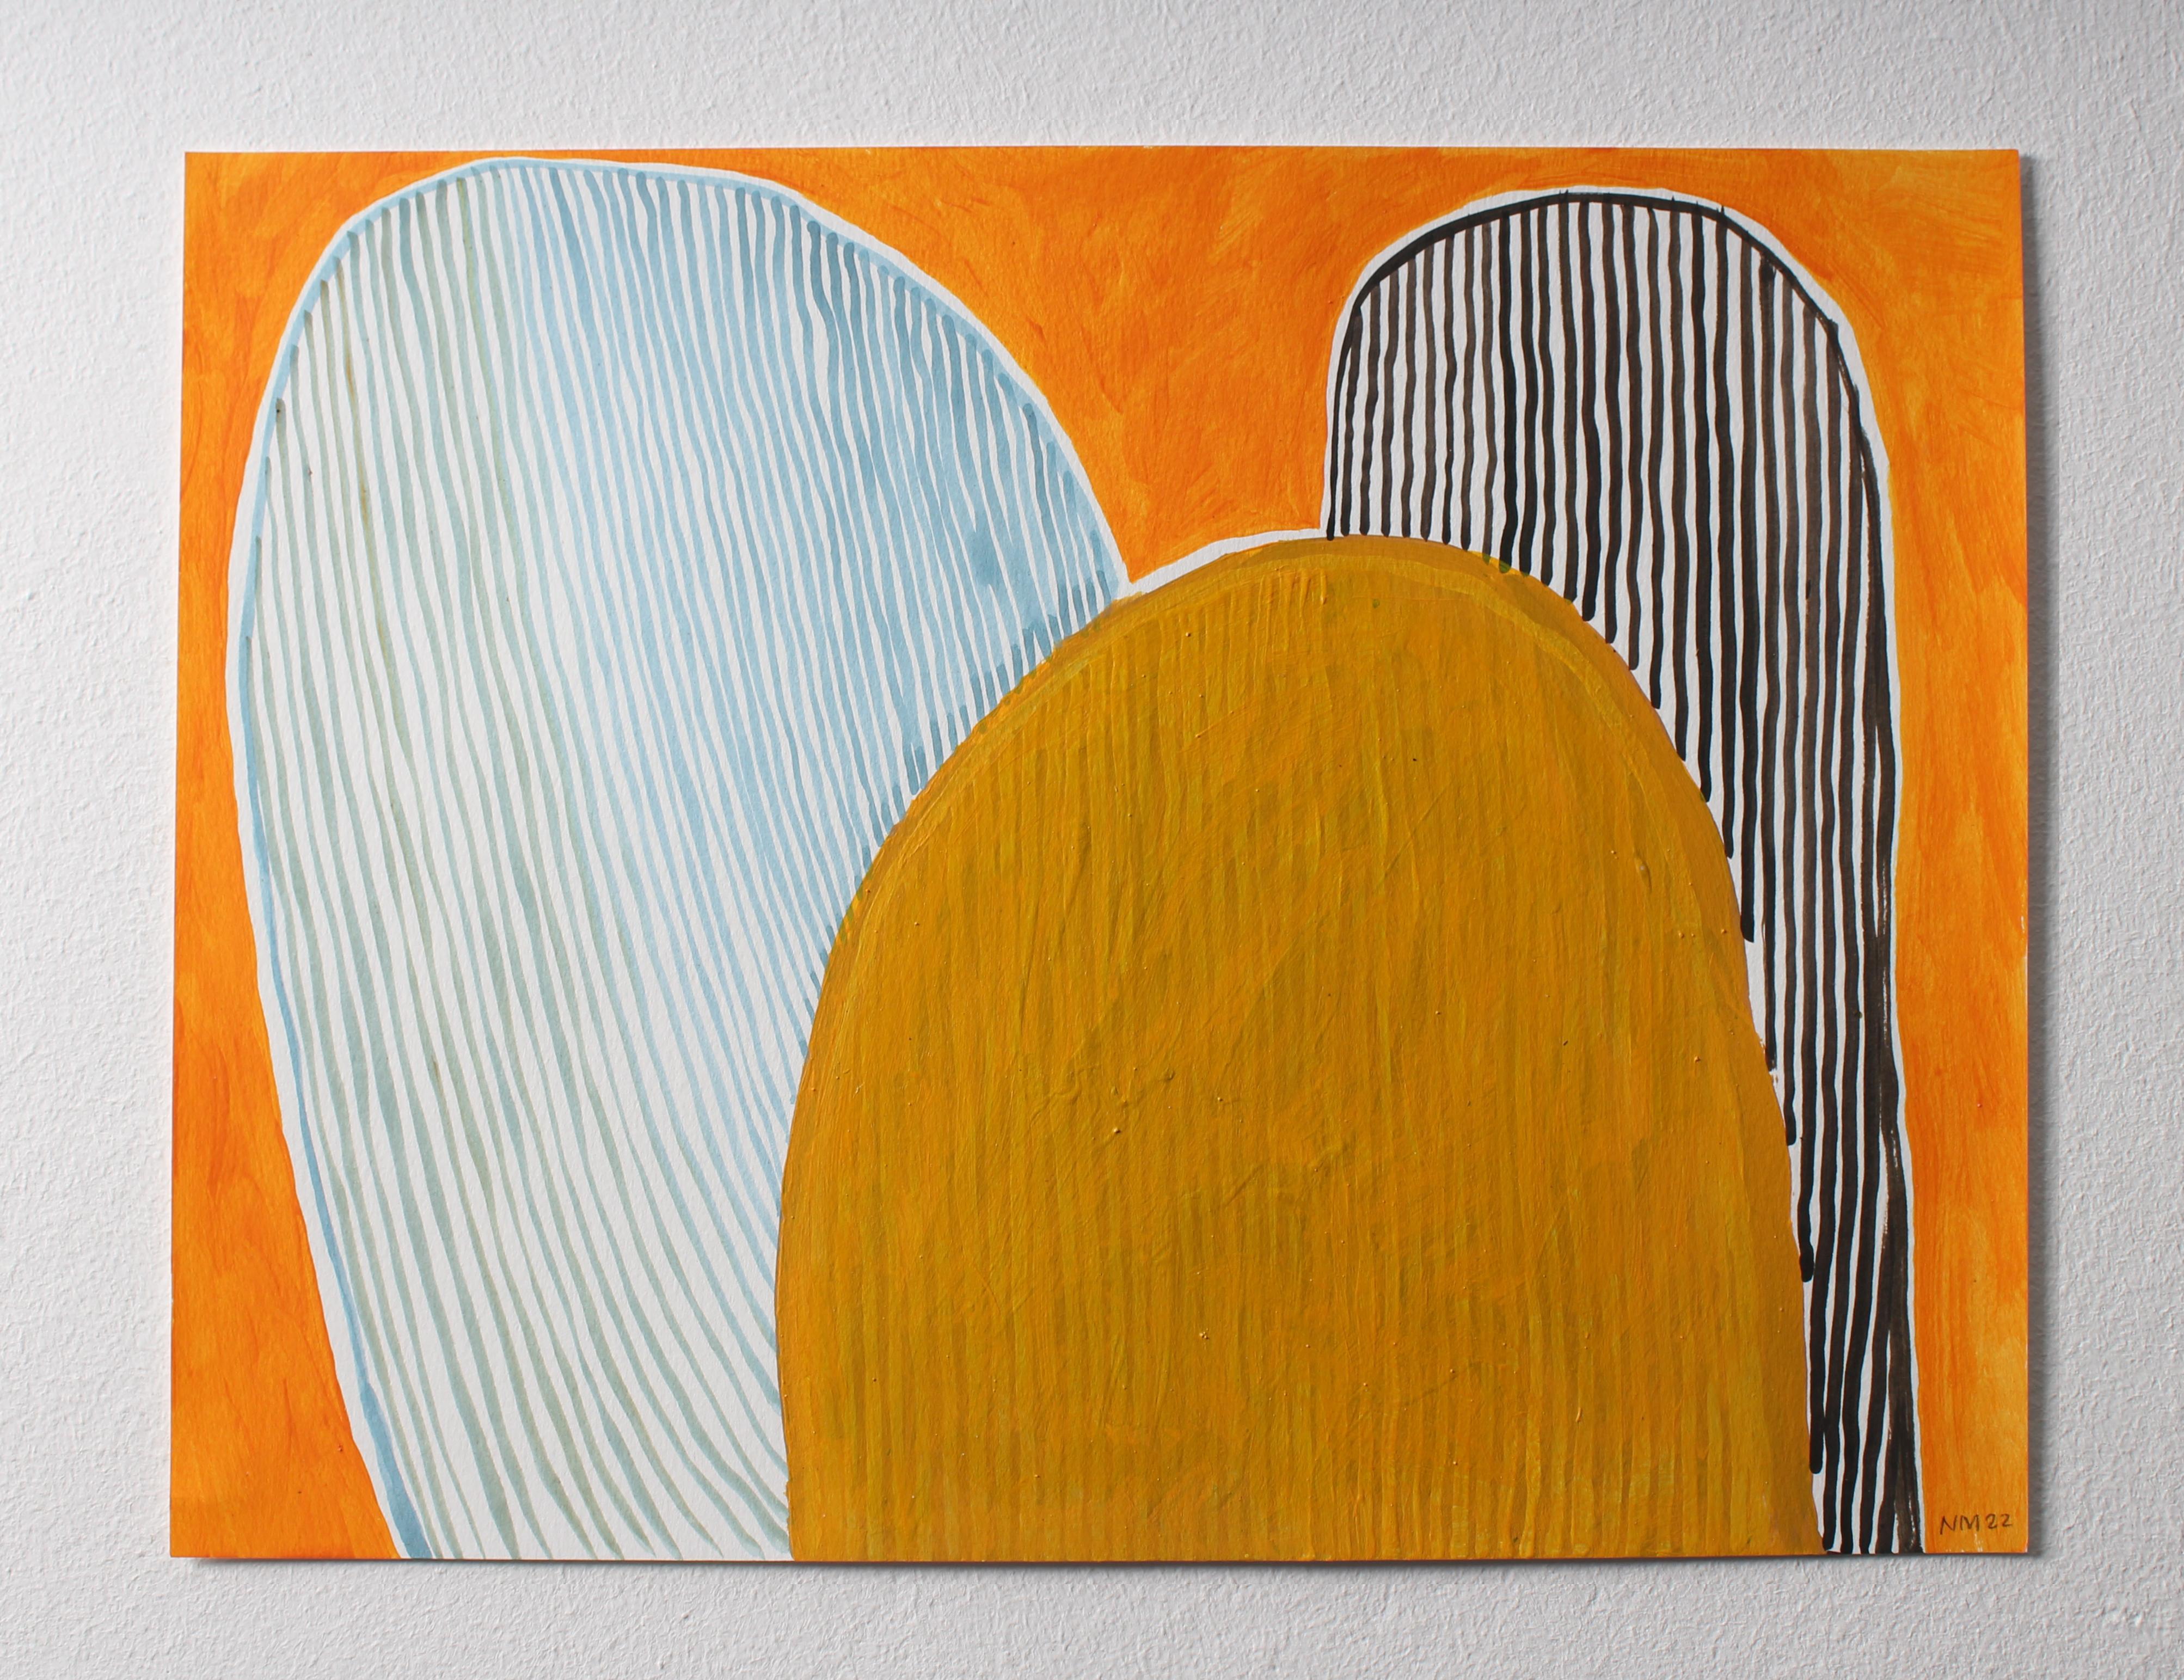 Cross Purpose Temple Series 7, Nicky Marais, abstract painting